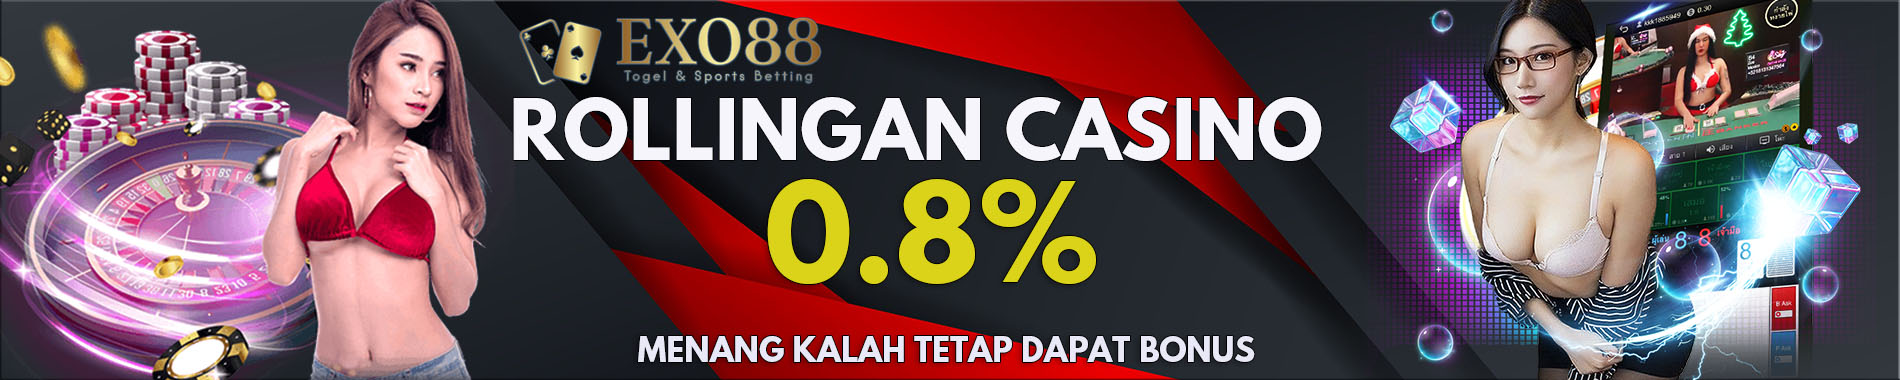 ROLLINGAN CASINO 0.8%